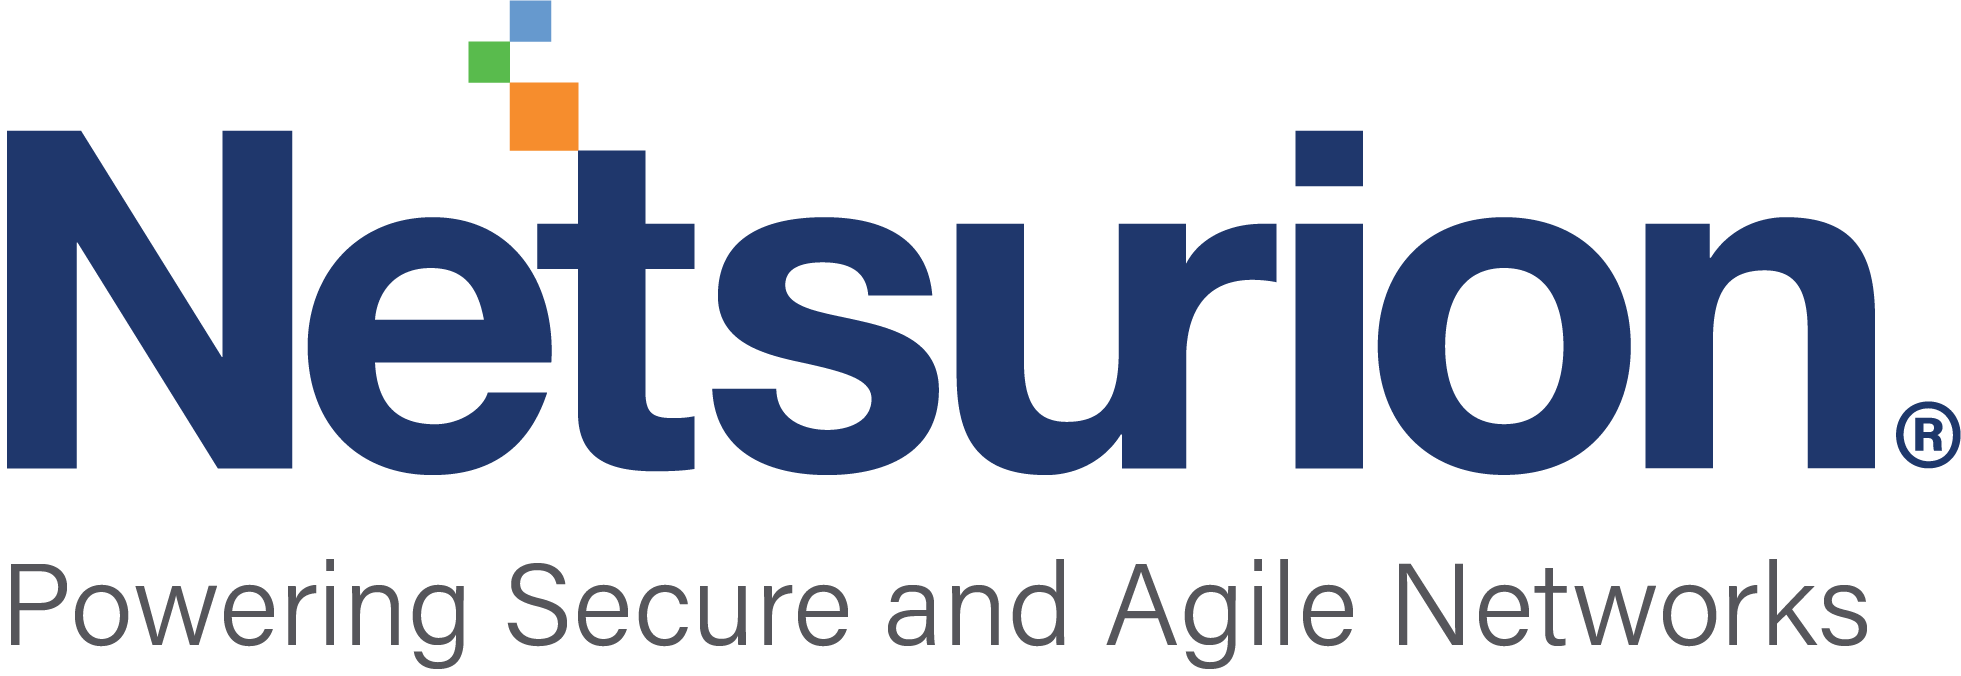 Netsurion Logo Color with Tagline